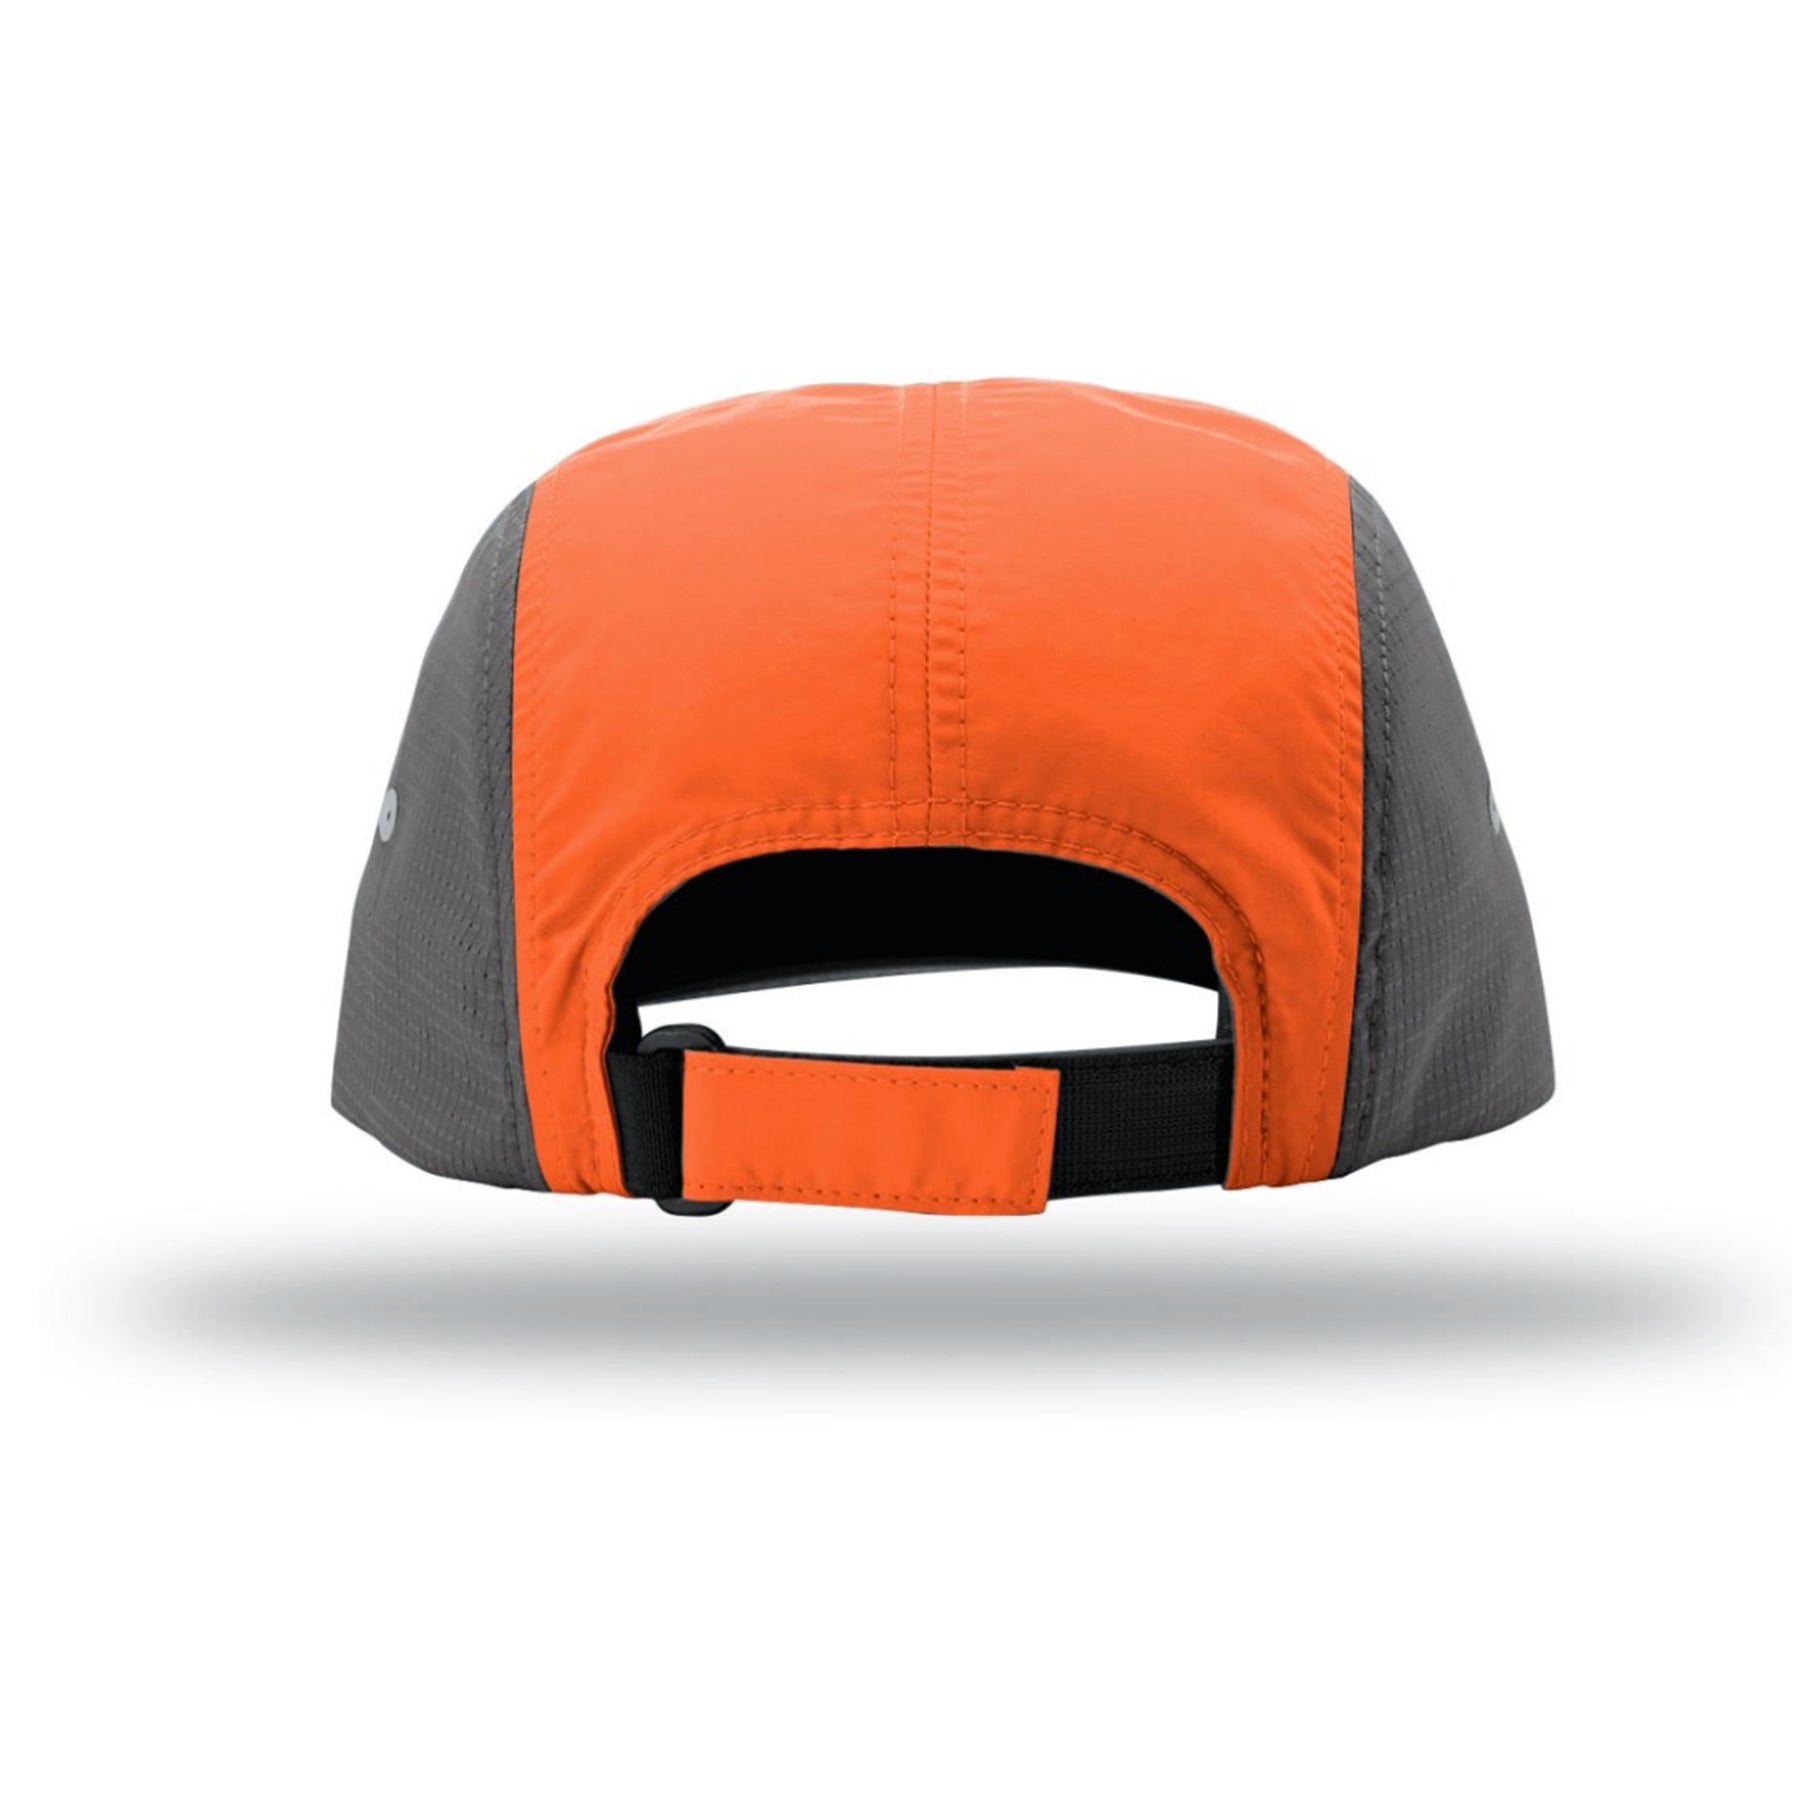 The Shelta Adventurer Cap In Orange back